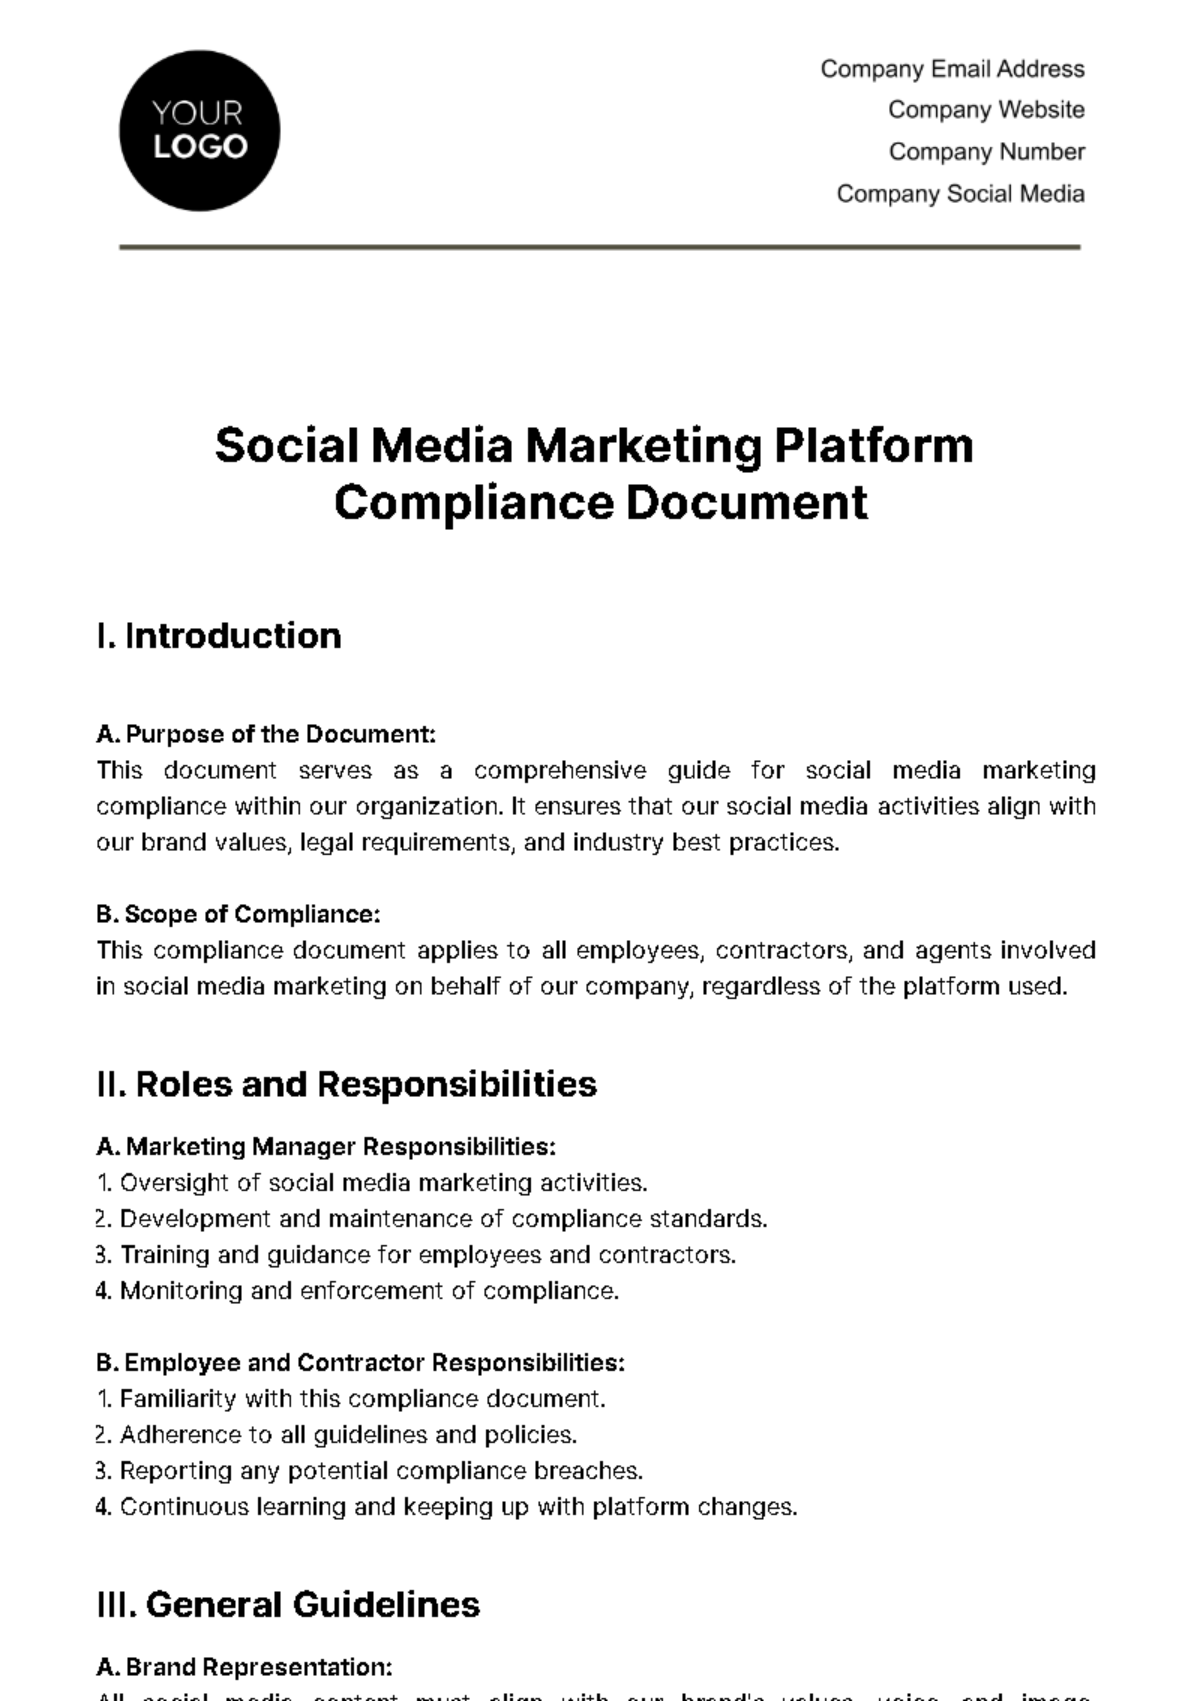 Social Media Marketing Platform Compliance Document Template